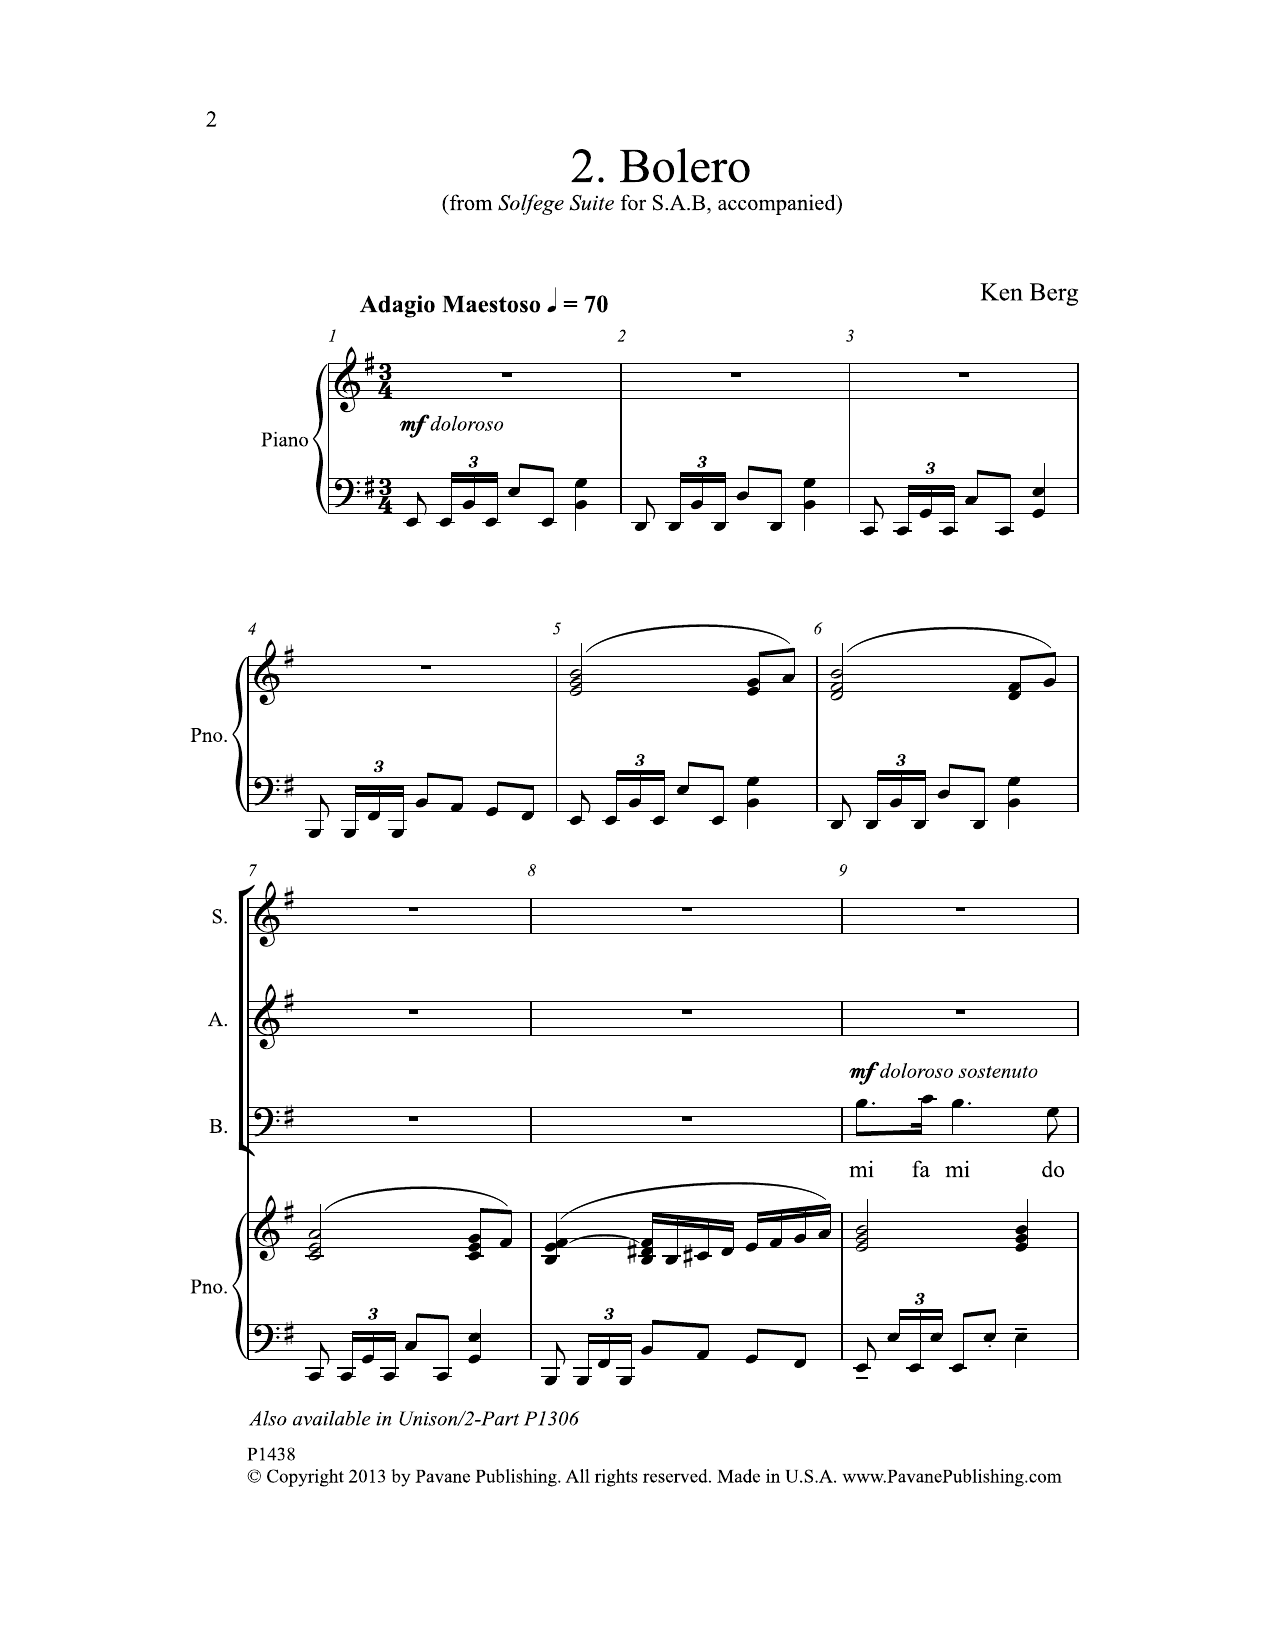 Ken Berg Bolero Sheet Music Notes & Chords for Choral - Download or Print PDF